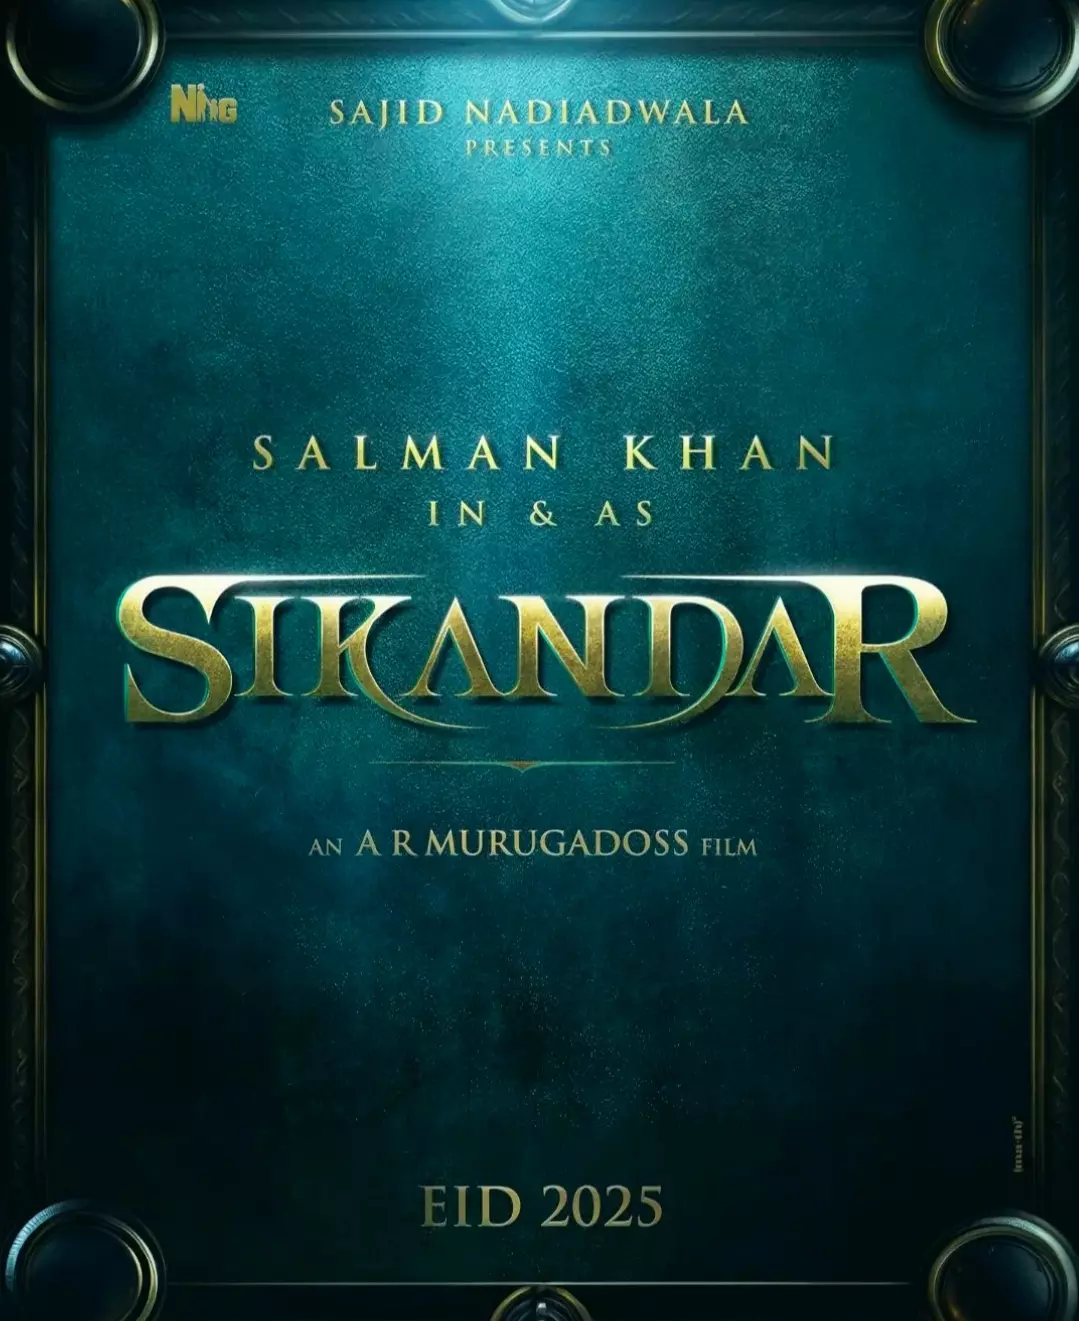 Salman Khan Sikandar Movie Poster